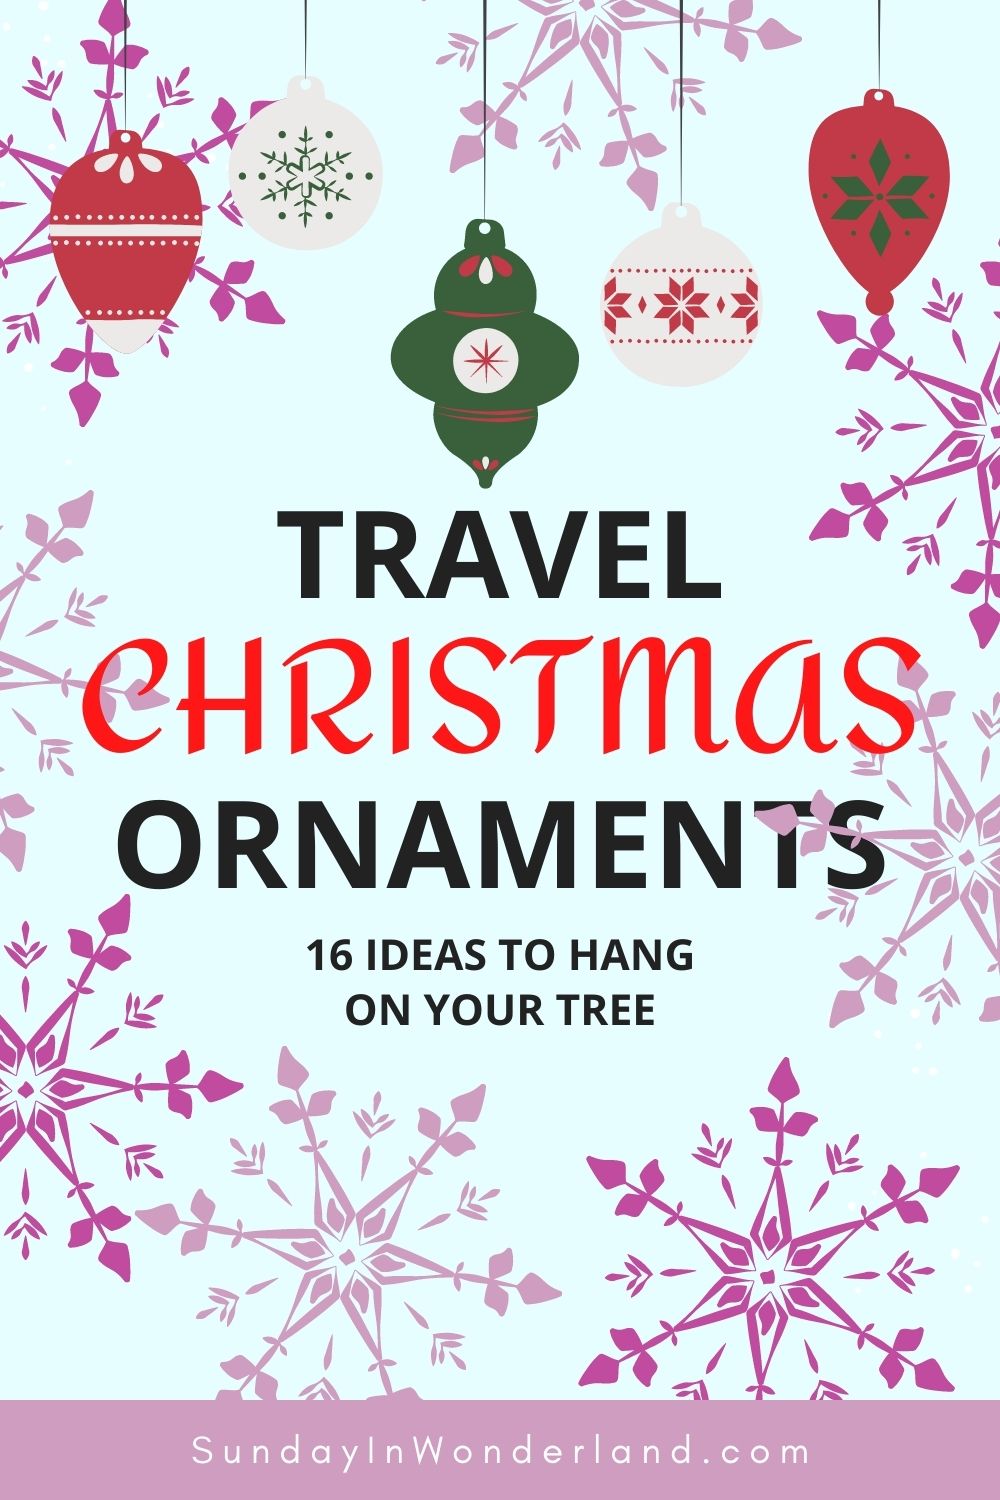 Travel Christmas Ornaments ideas